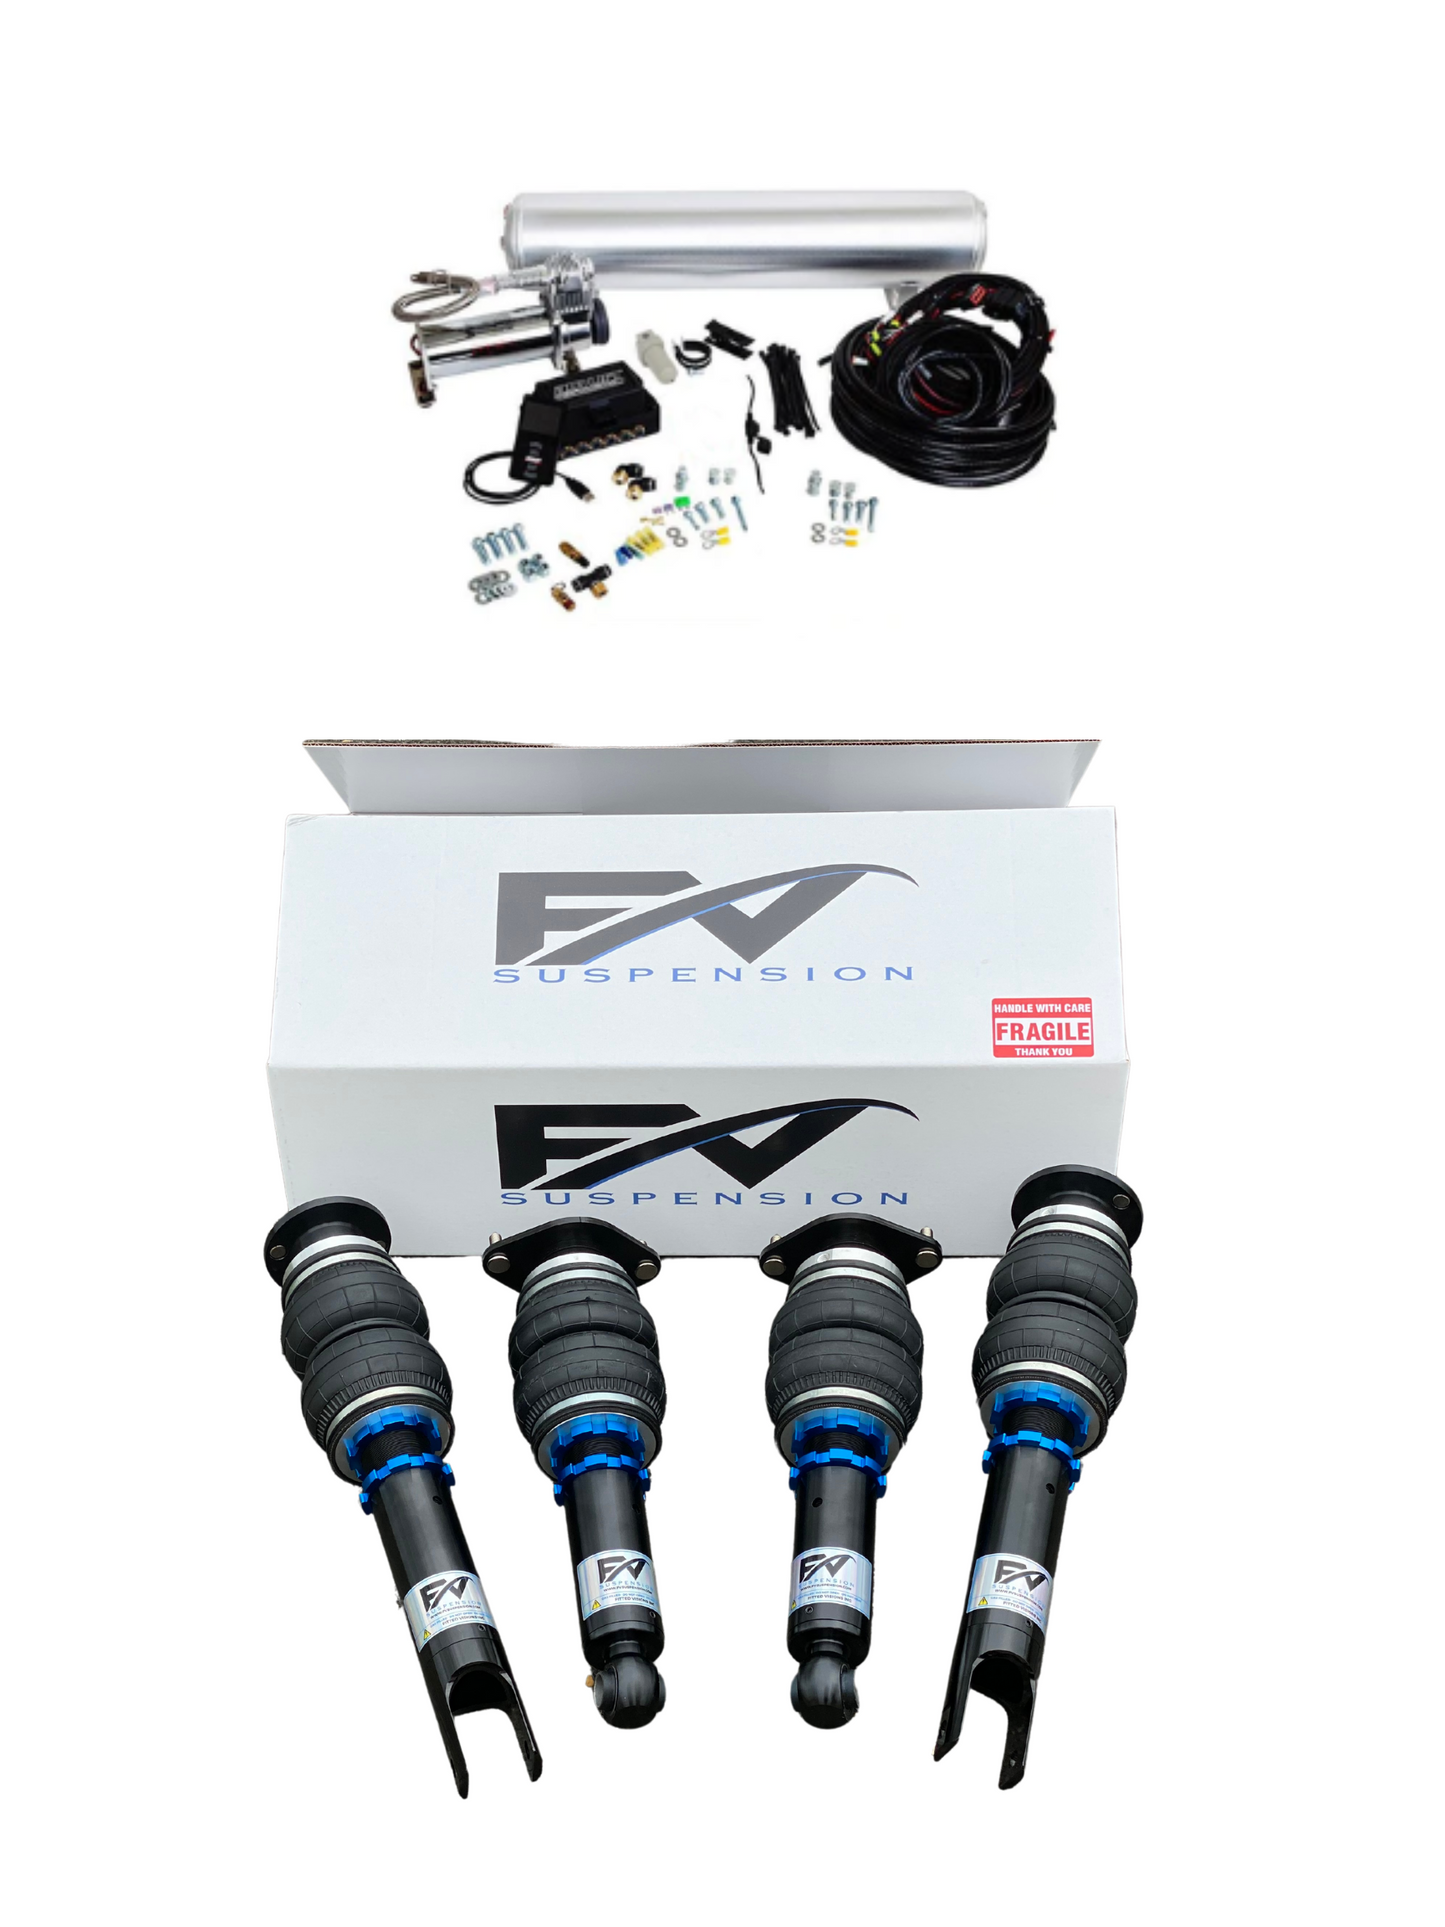 FV Suspension 3P Tier 2 Complete Air Ride kit for 97-02 Honda Accord-NA - FVALtier2kit230